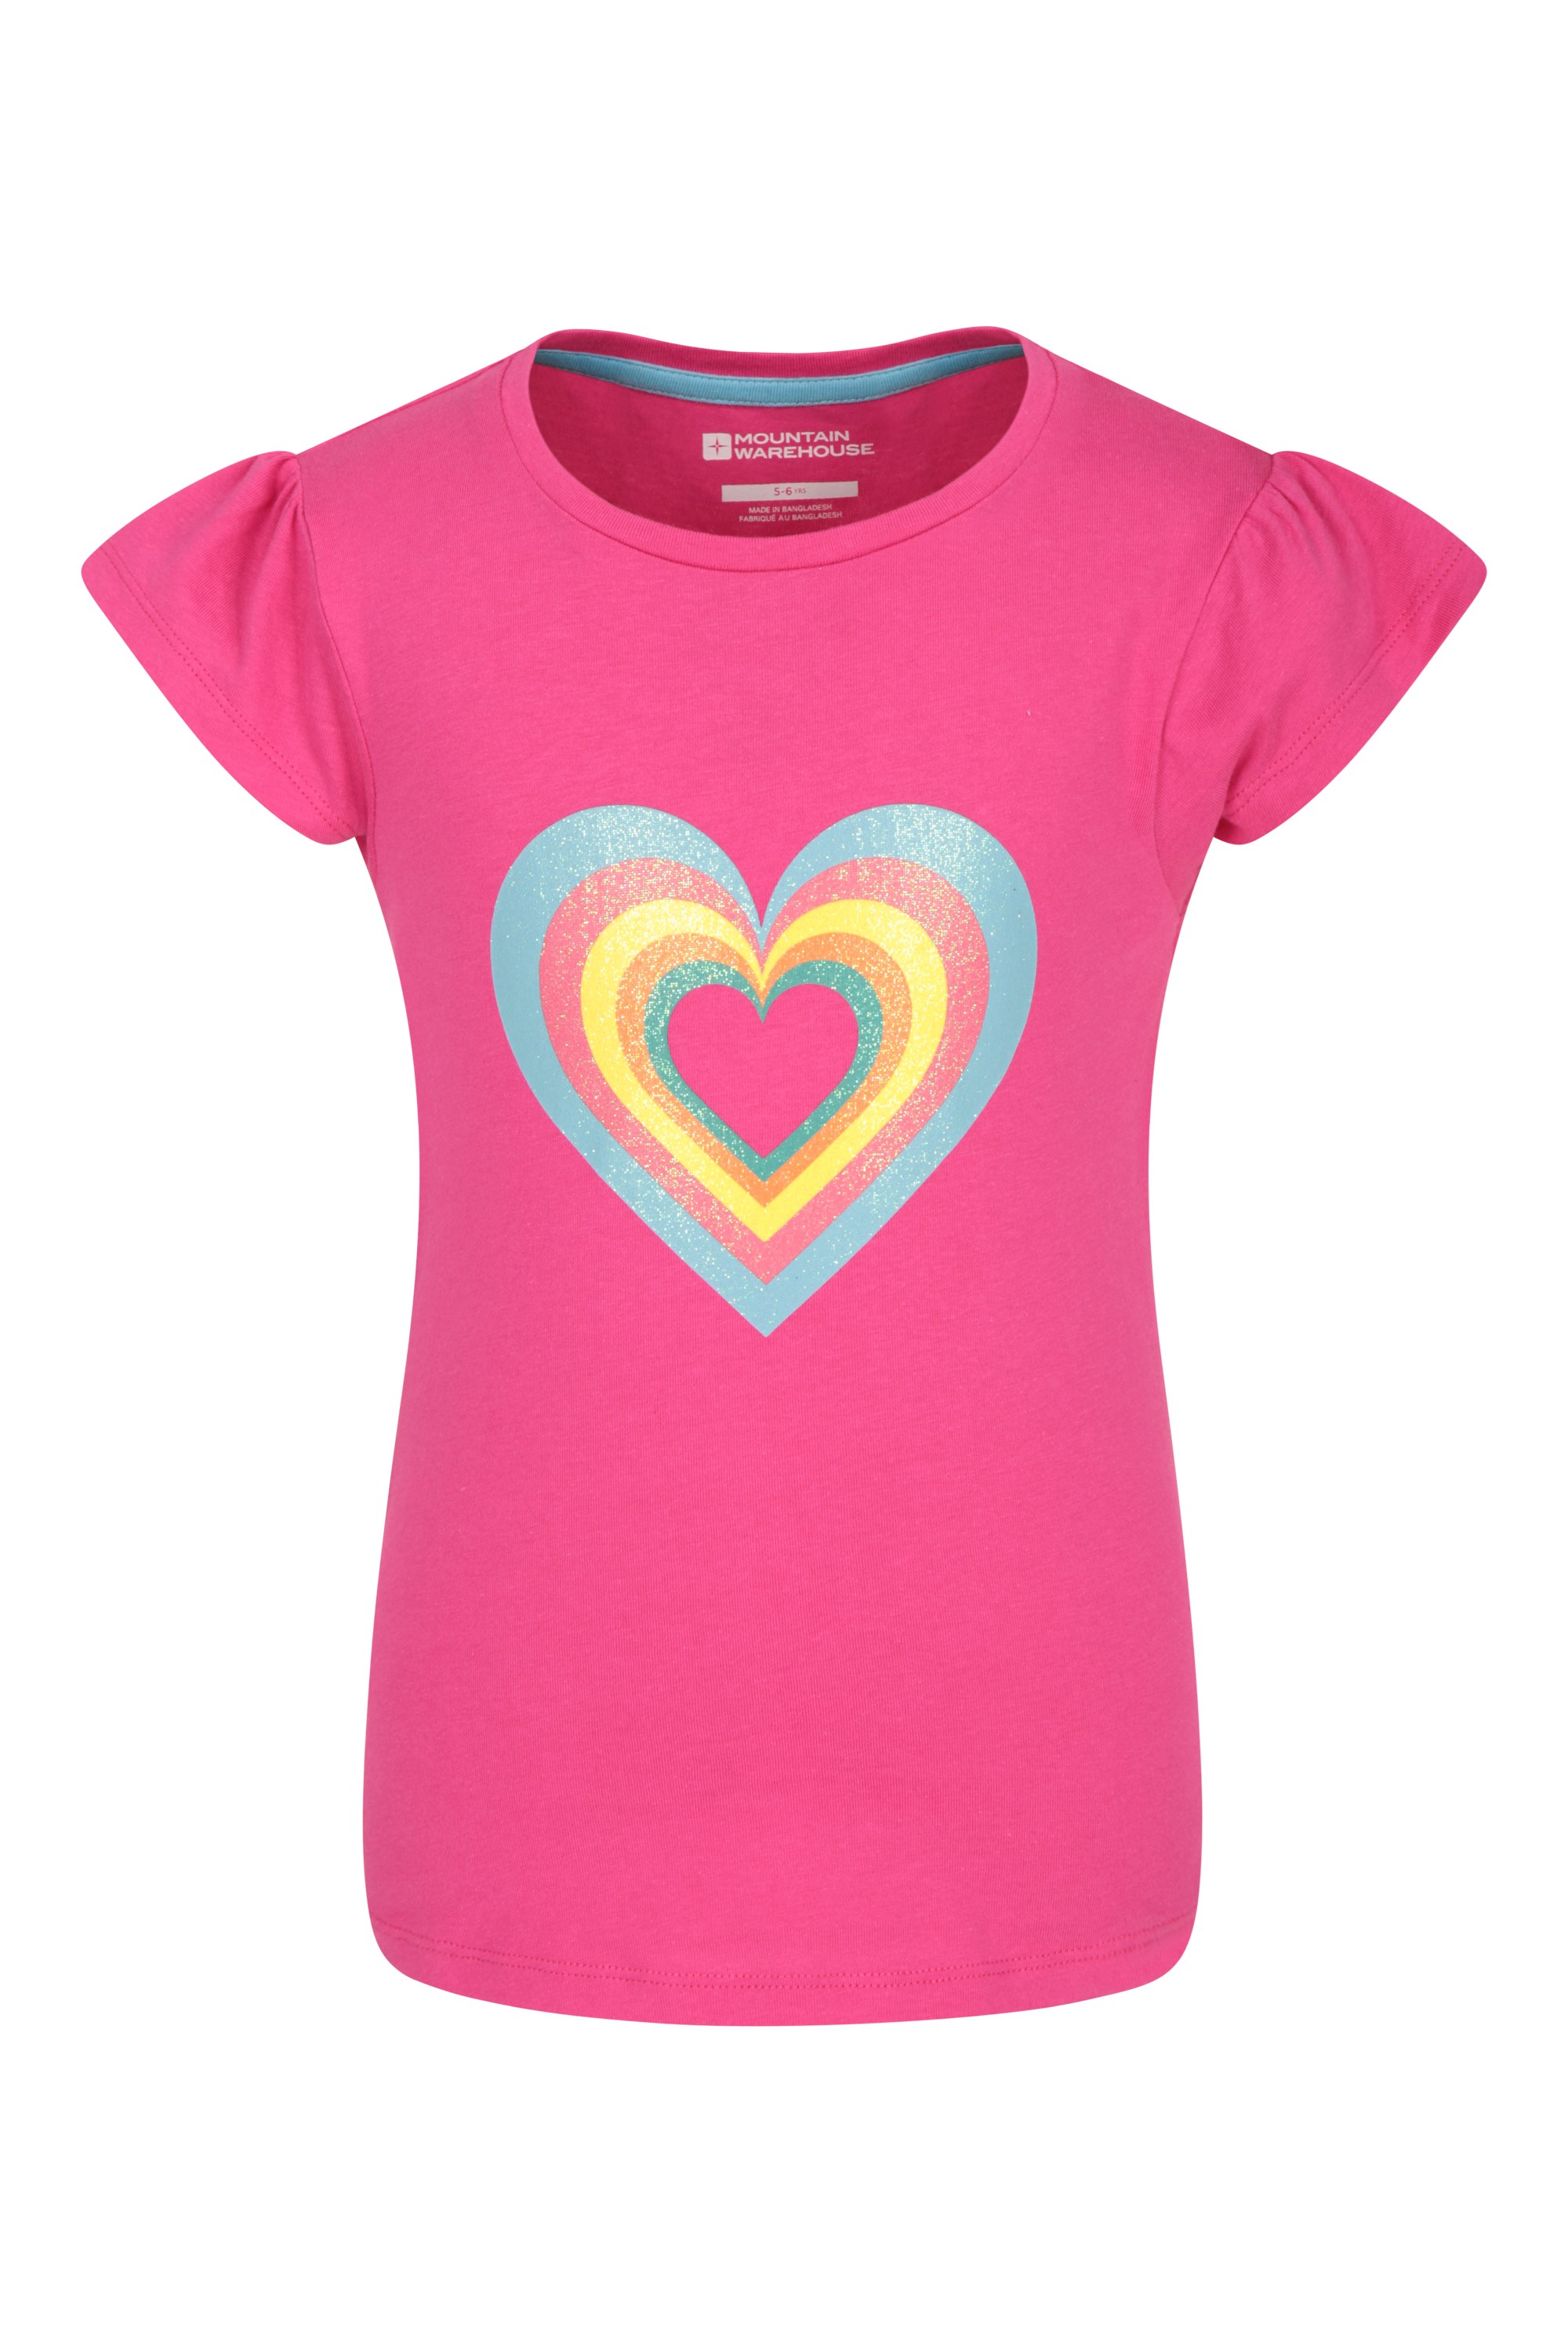 Glitter Hearts Kids T-shirt - Pink